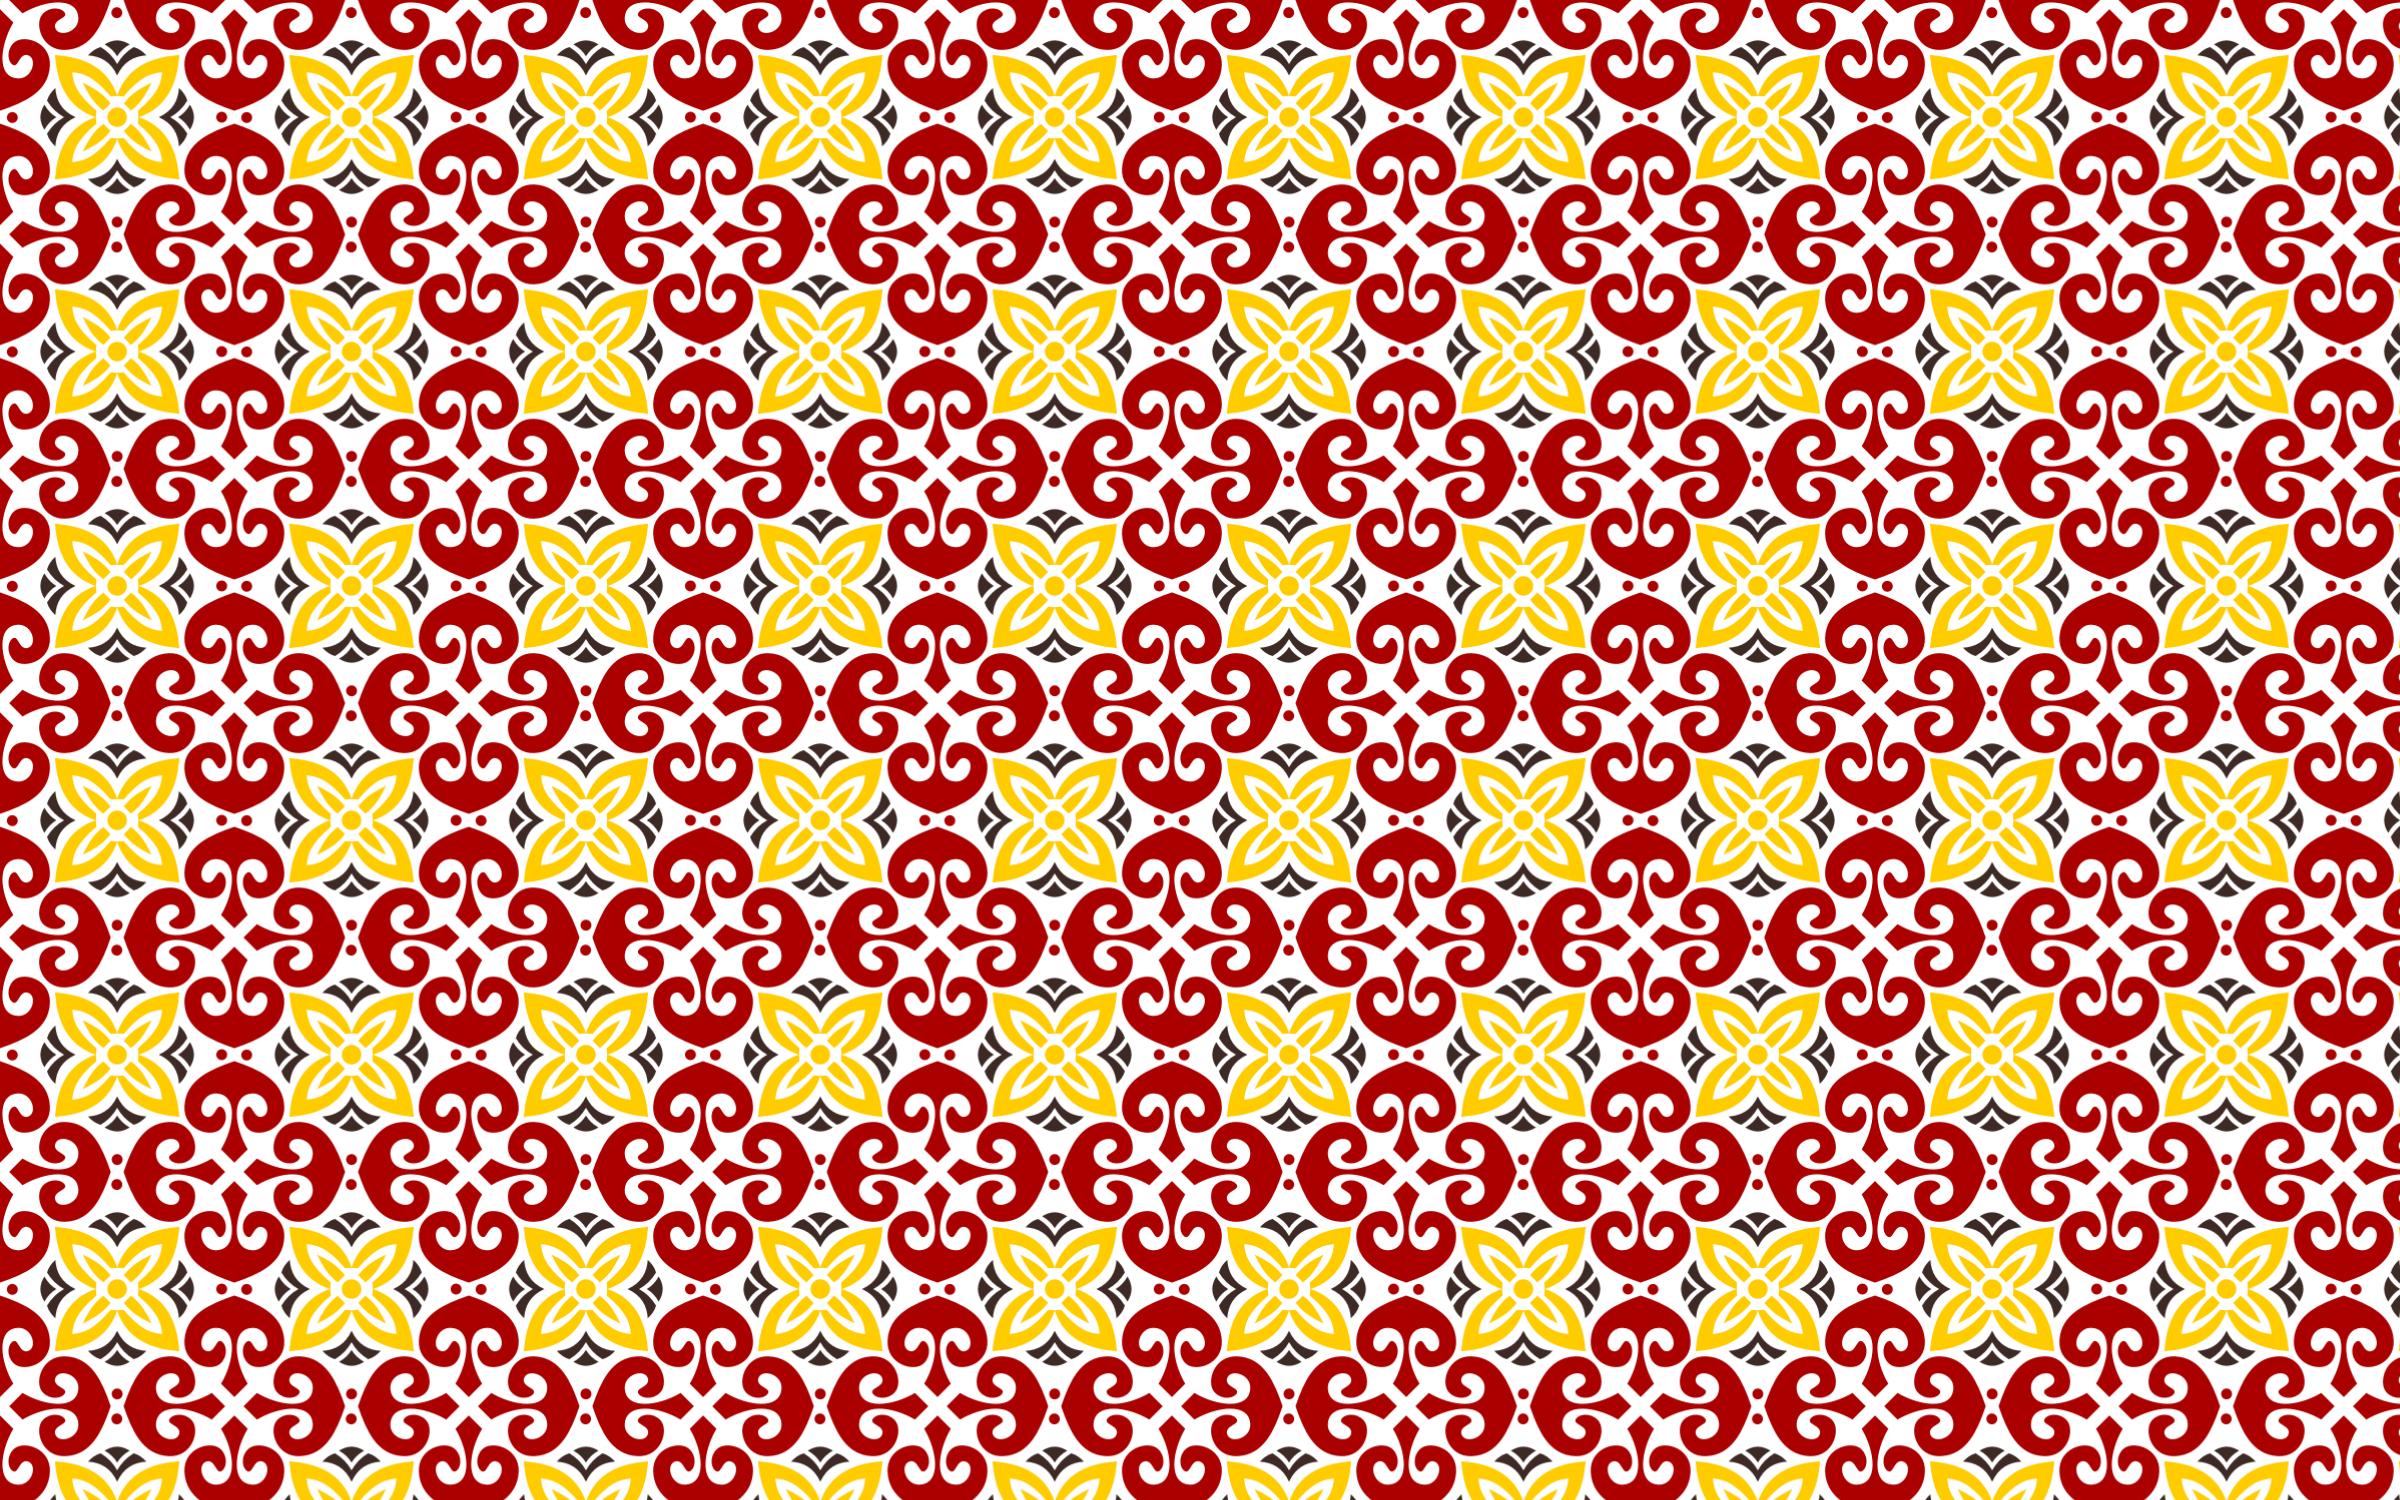 Seamless Gustavo Rezende's Tile Pattern icons